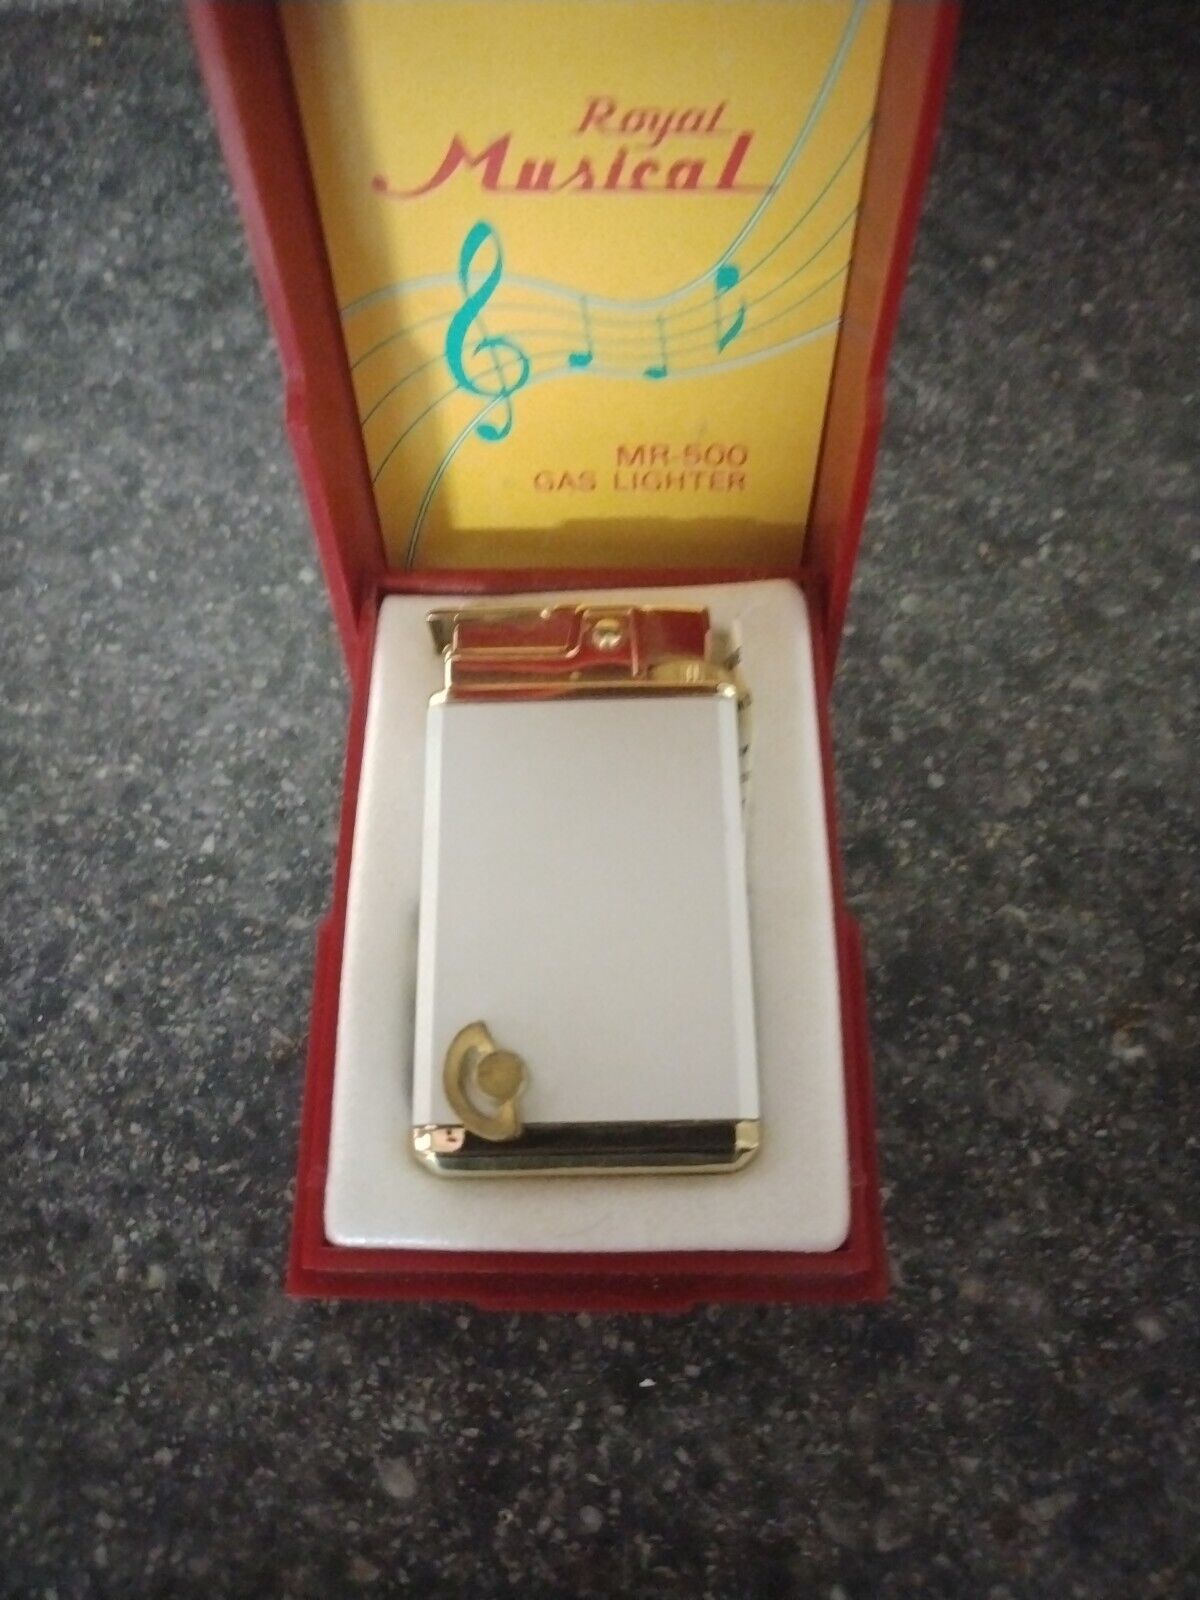  Vintage Royal Musical Butane Gas Lighter Original Box made in Cigar